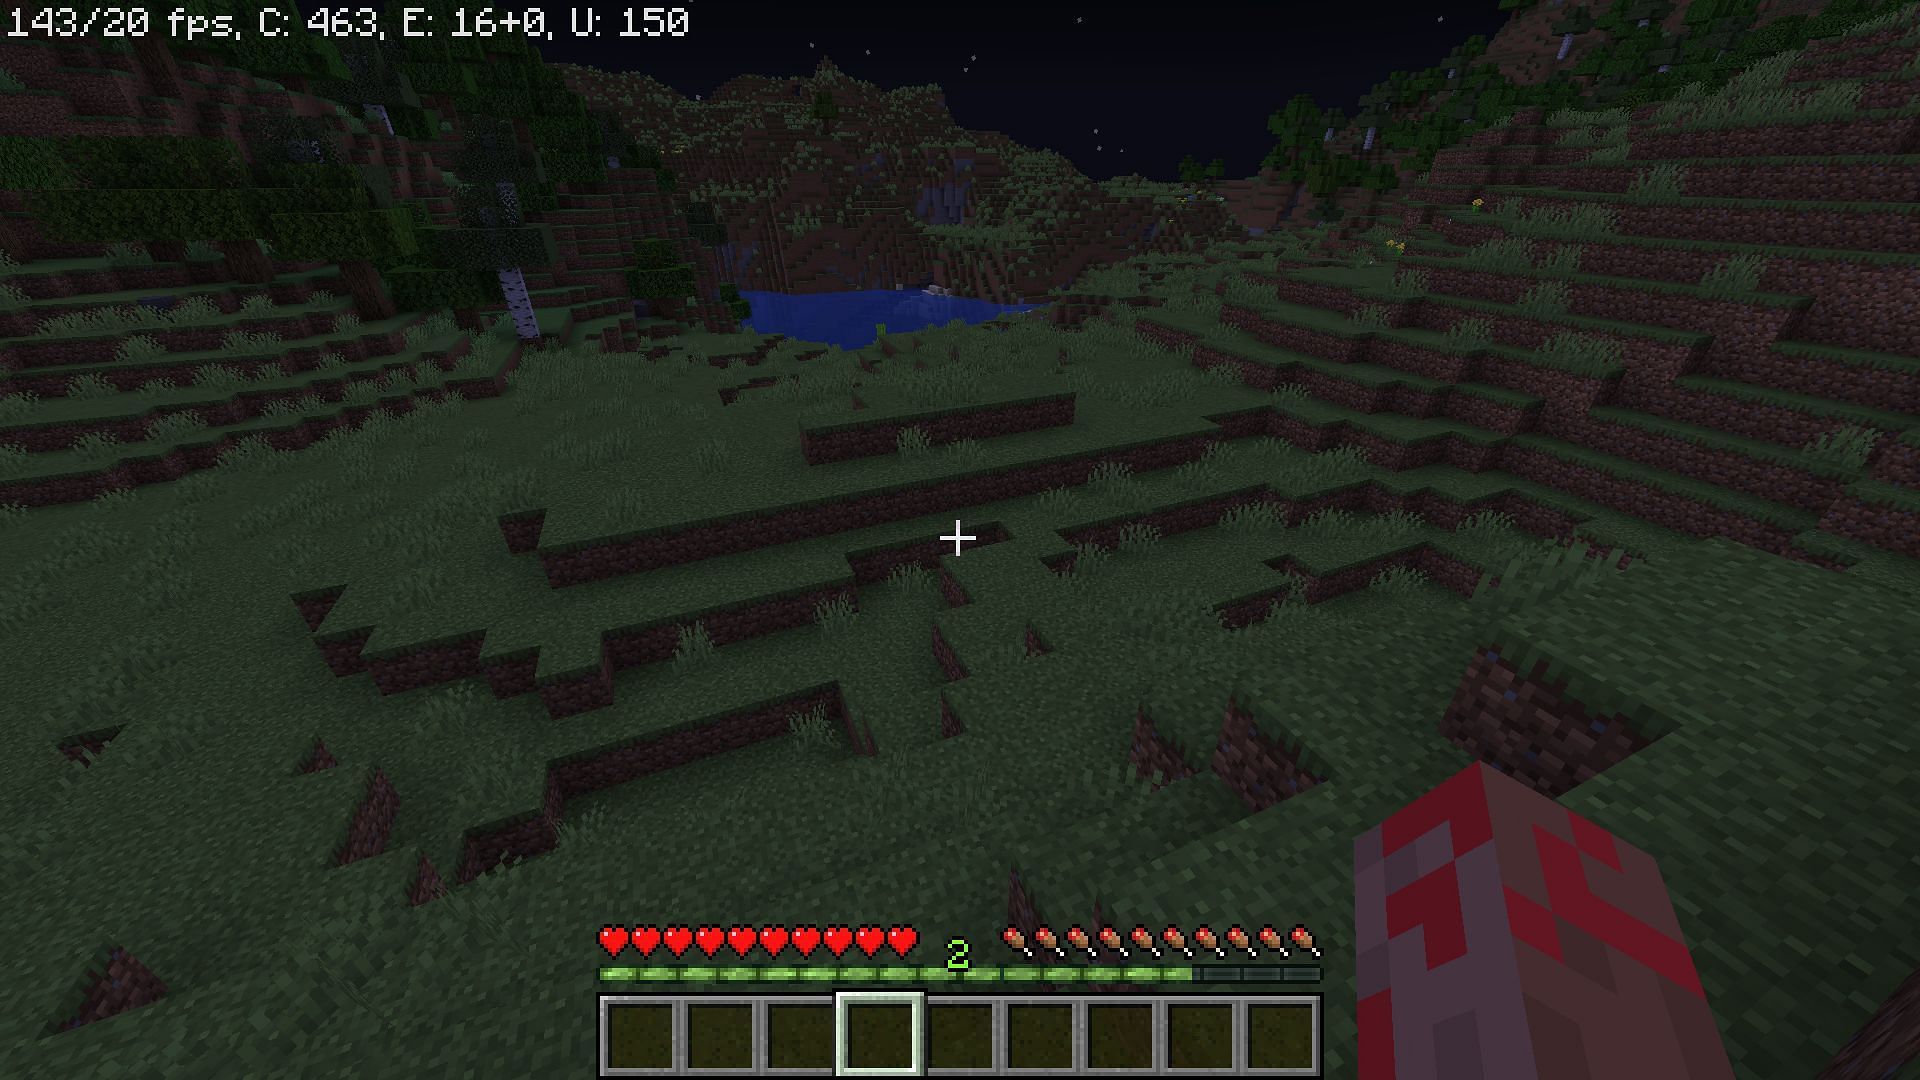 No hostile mobs spawning at night (Image via Minecraft)